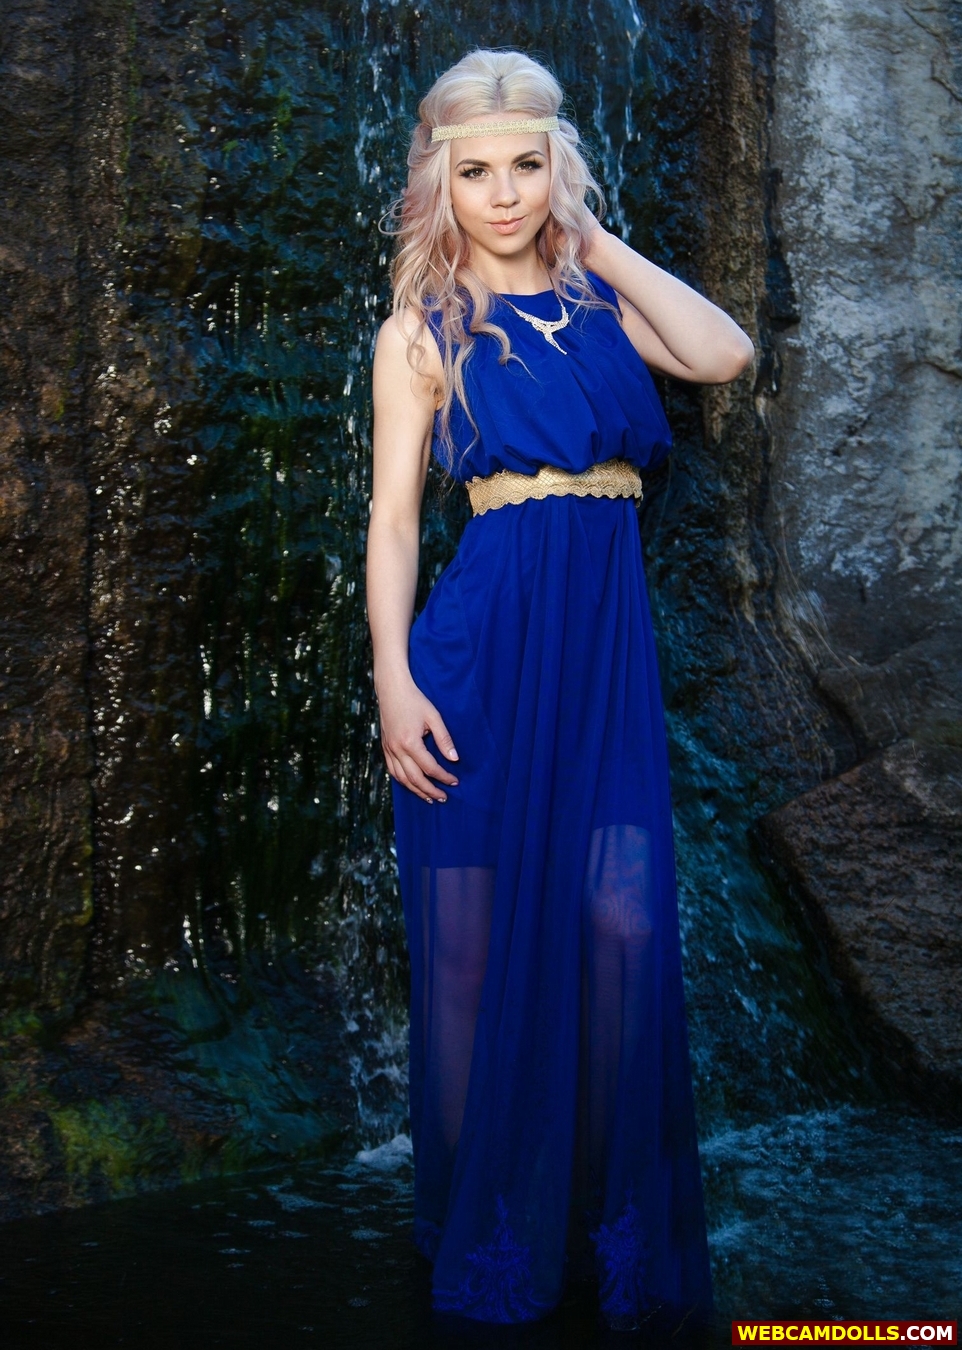 Blonde Girl standing in Water in Blue Long See Through Dress on Webcamdolls